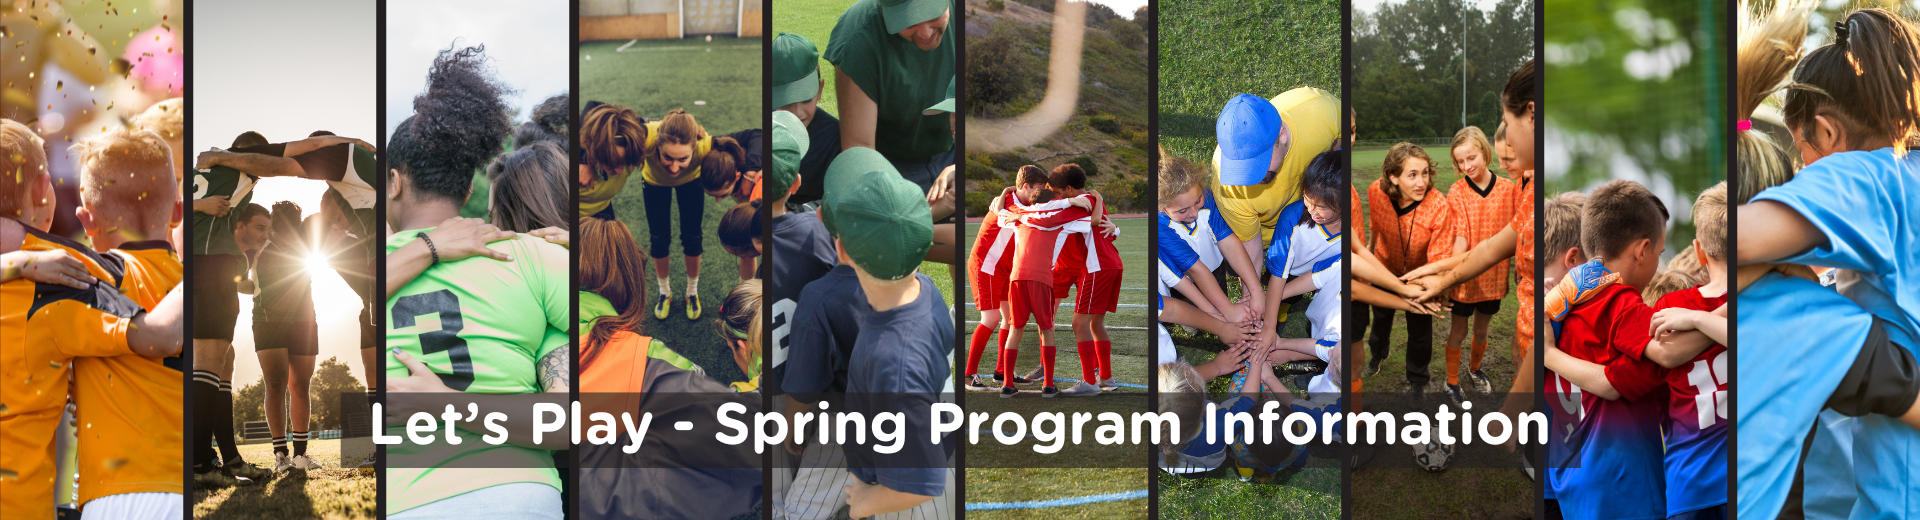 Spring Program Information